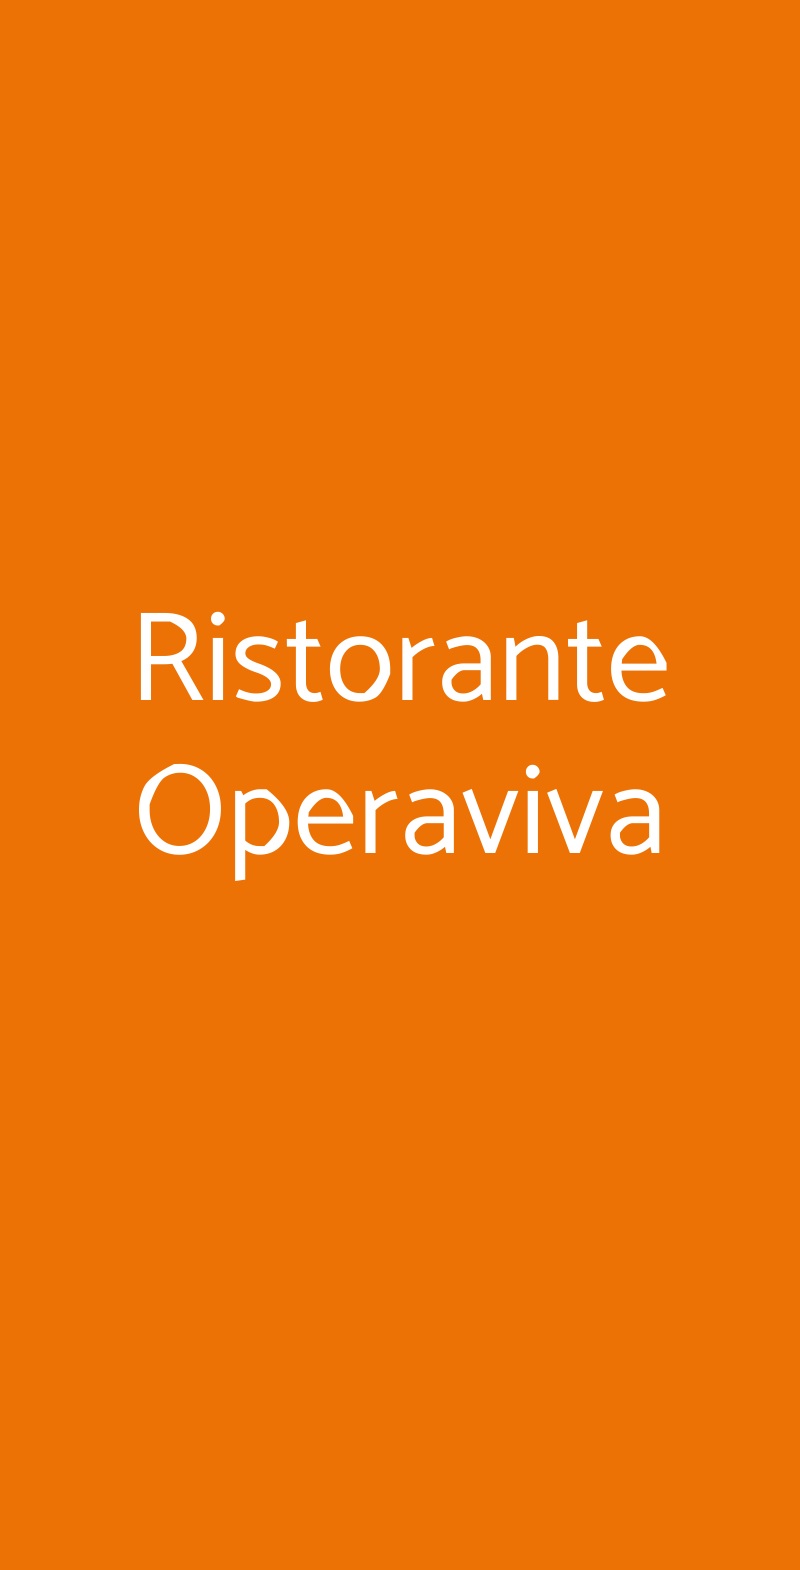 Ristorante Operaviva Parma menù 1 pagina